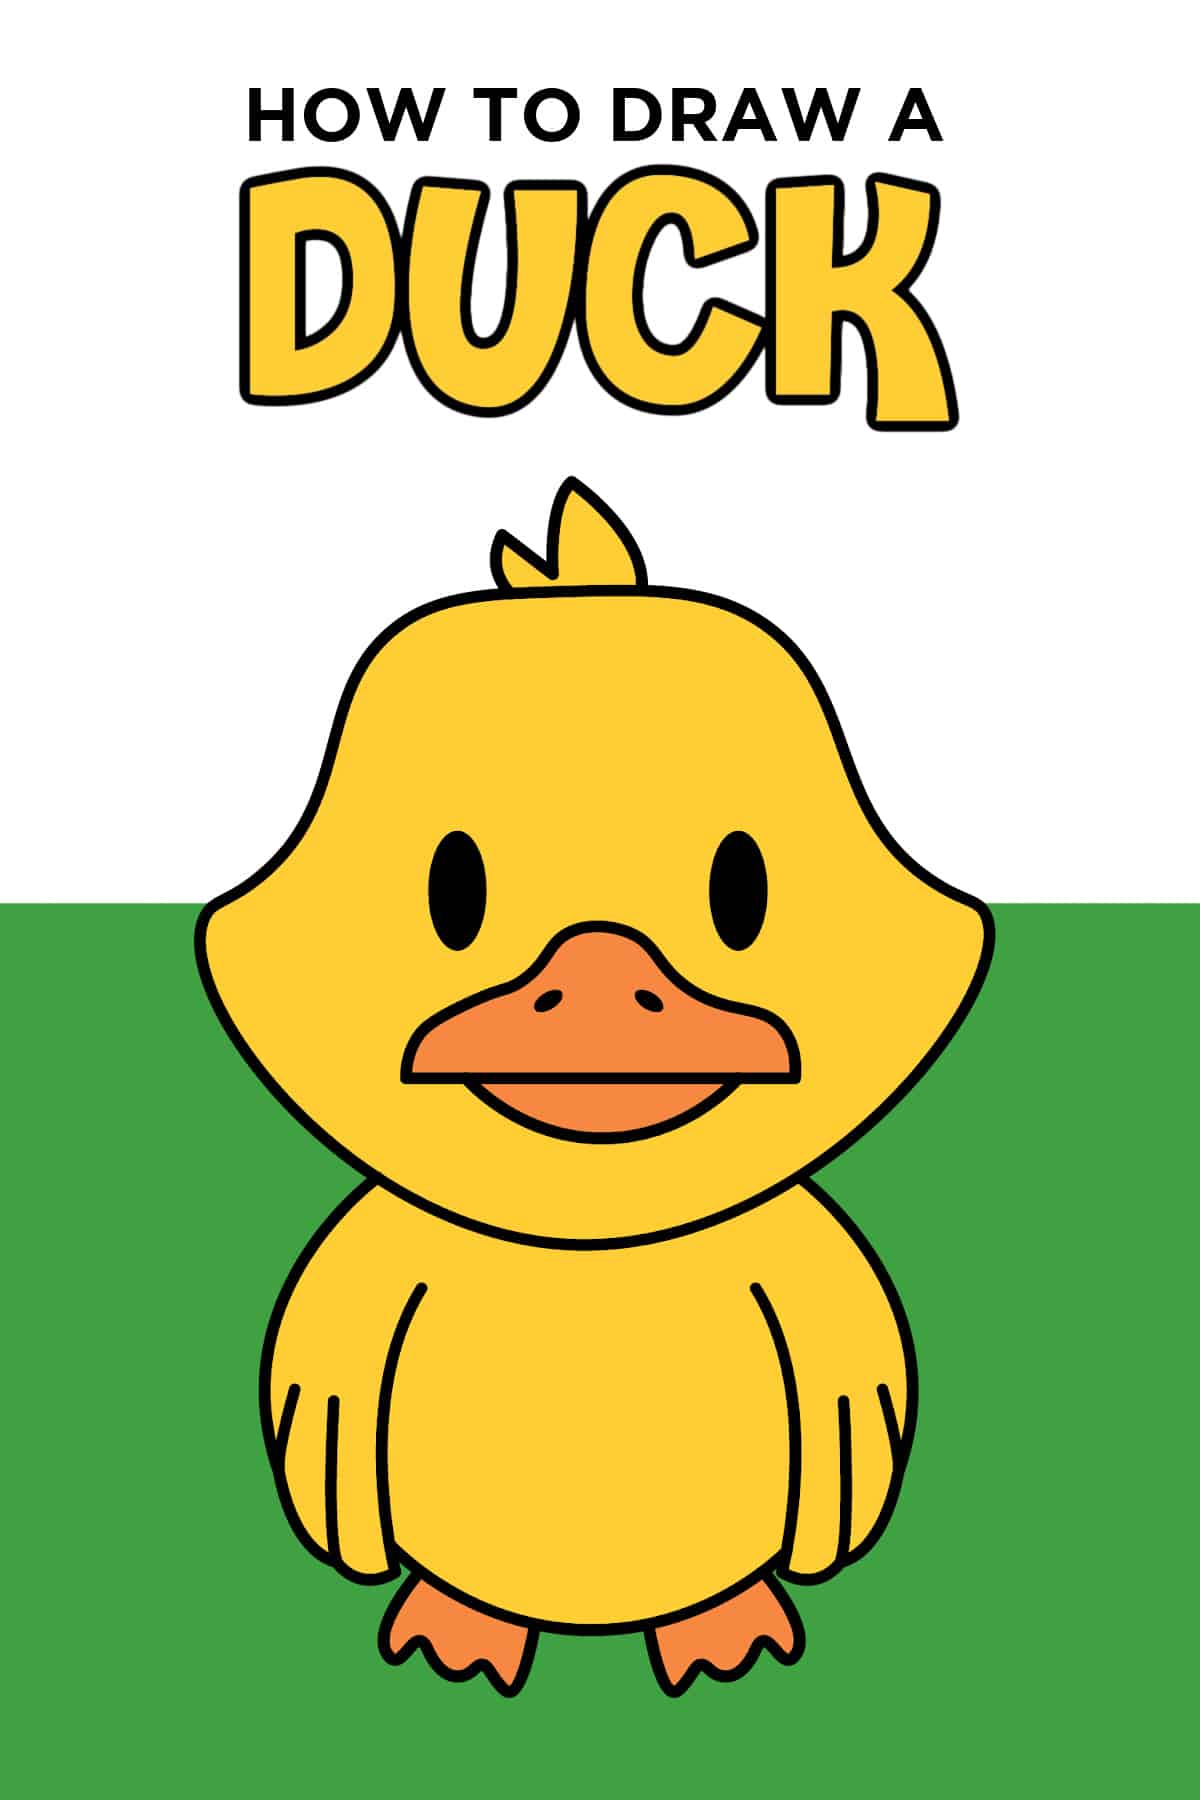 Mallard Duck by panicKELS on DeviantArt